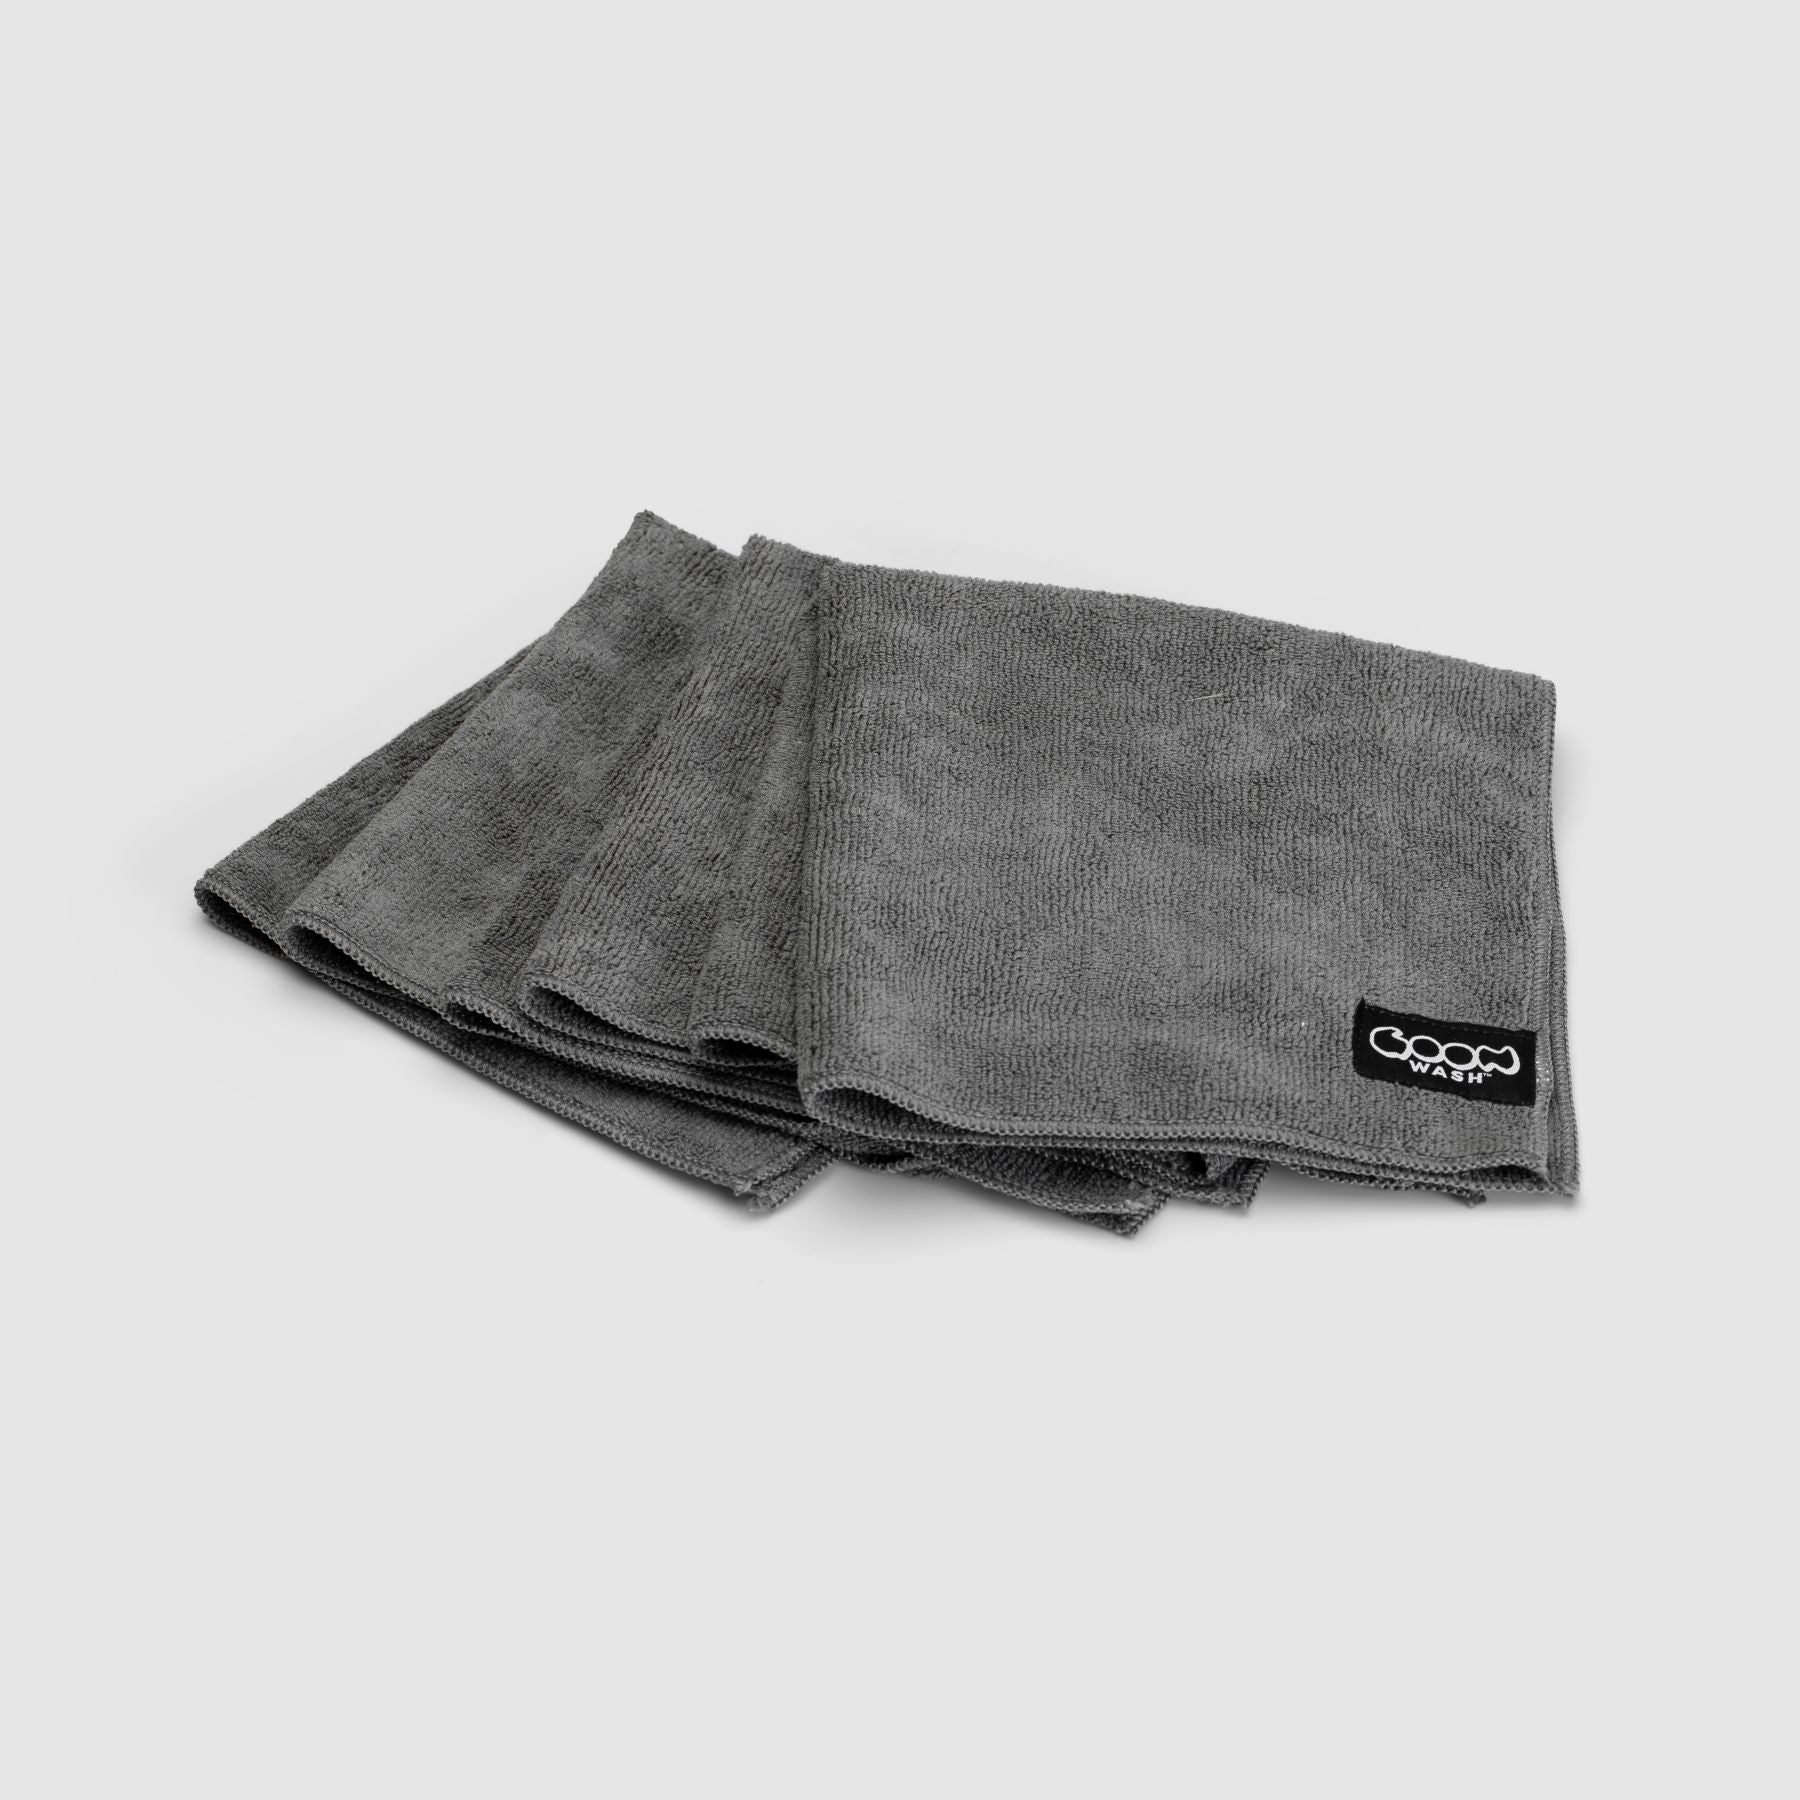 Goon Wash® Premium Towel (3 Pack)